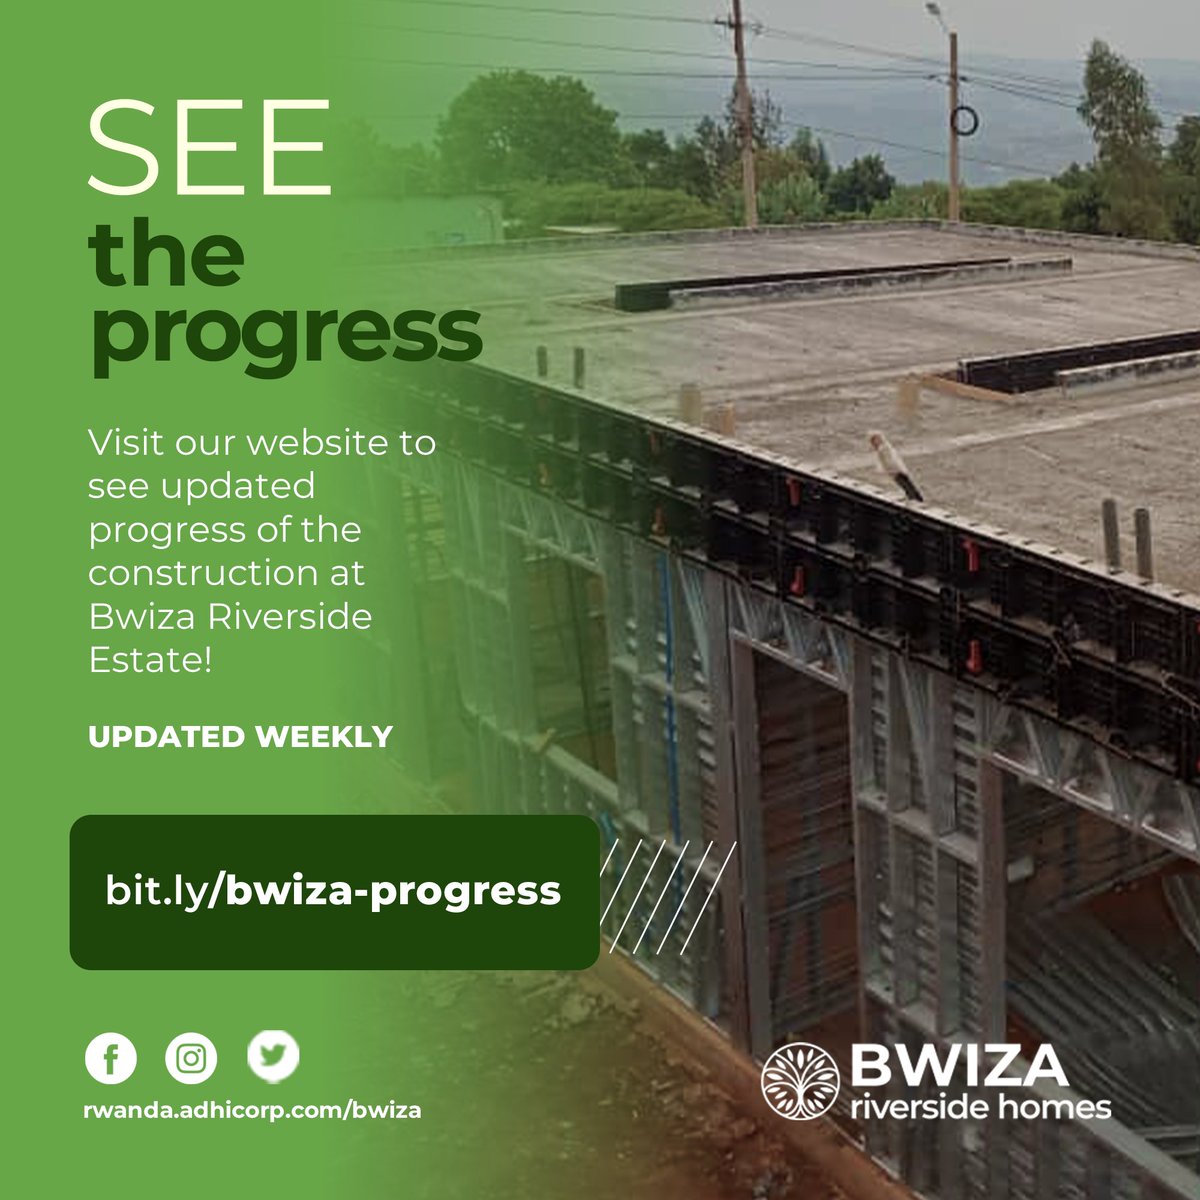 GO TO: bit.ly/bwiza-progress
◾◾◾◾◾
#bwizariverside #affordablehome #construction #innovation #lightsteelframe #Kigali #Rwanda #My250 #greencertified #sustainable #madeinrwanda